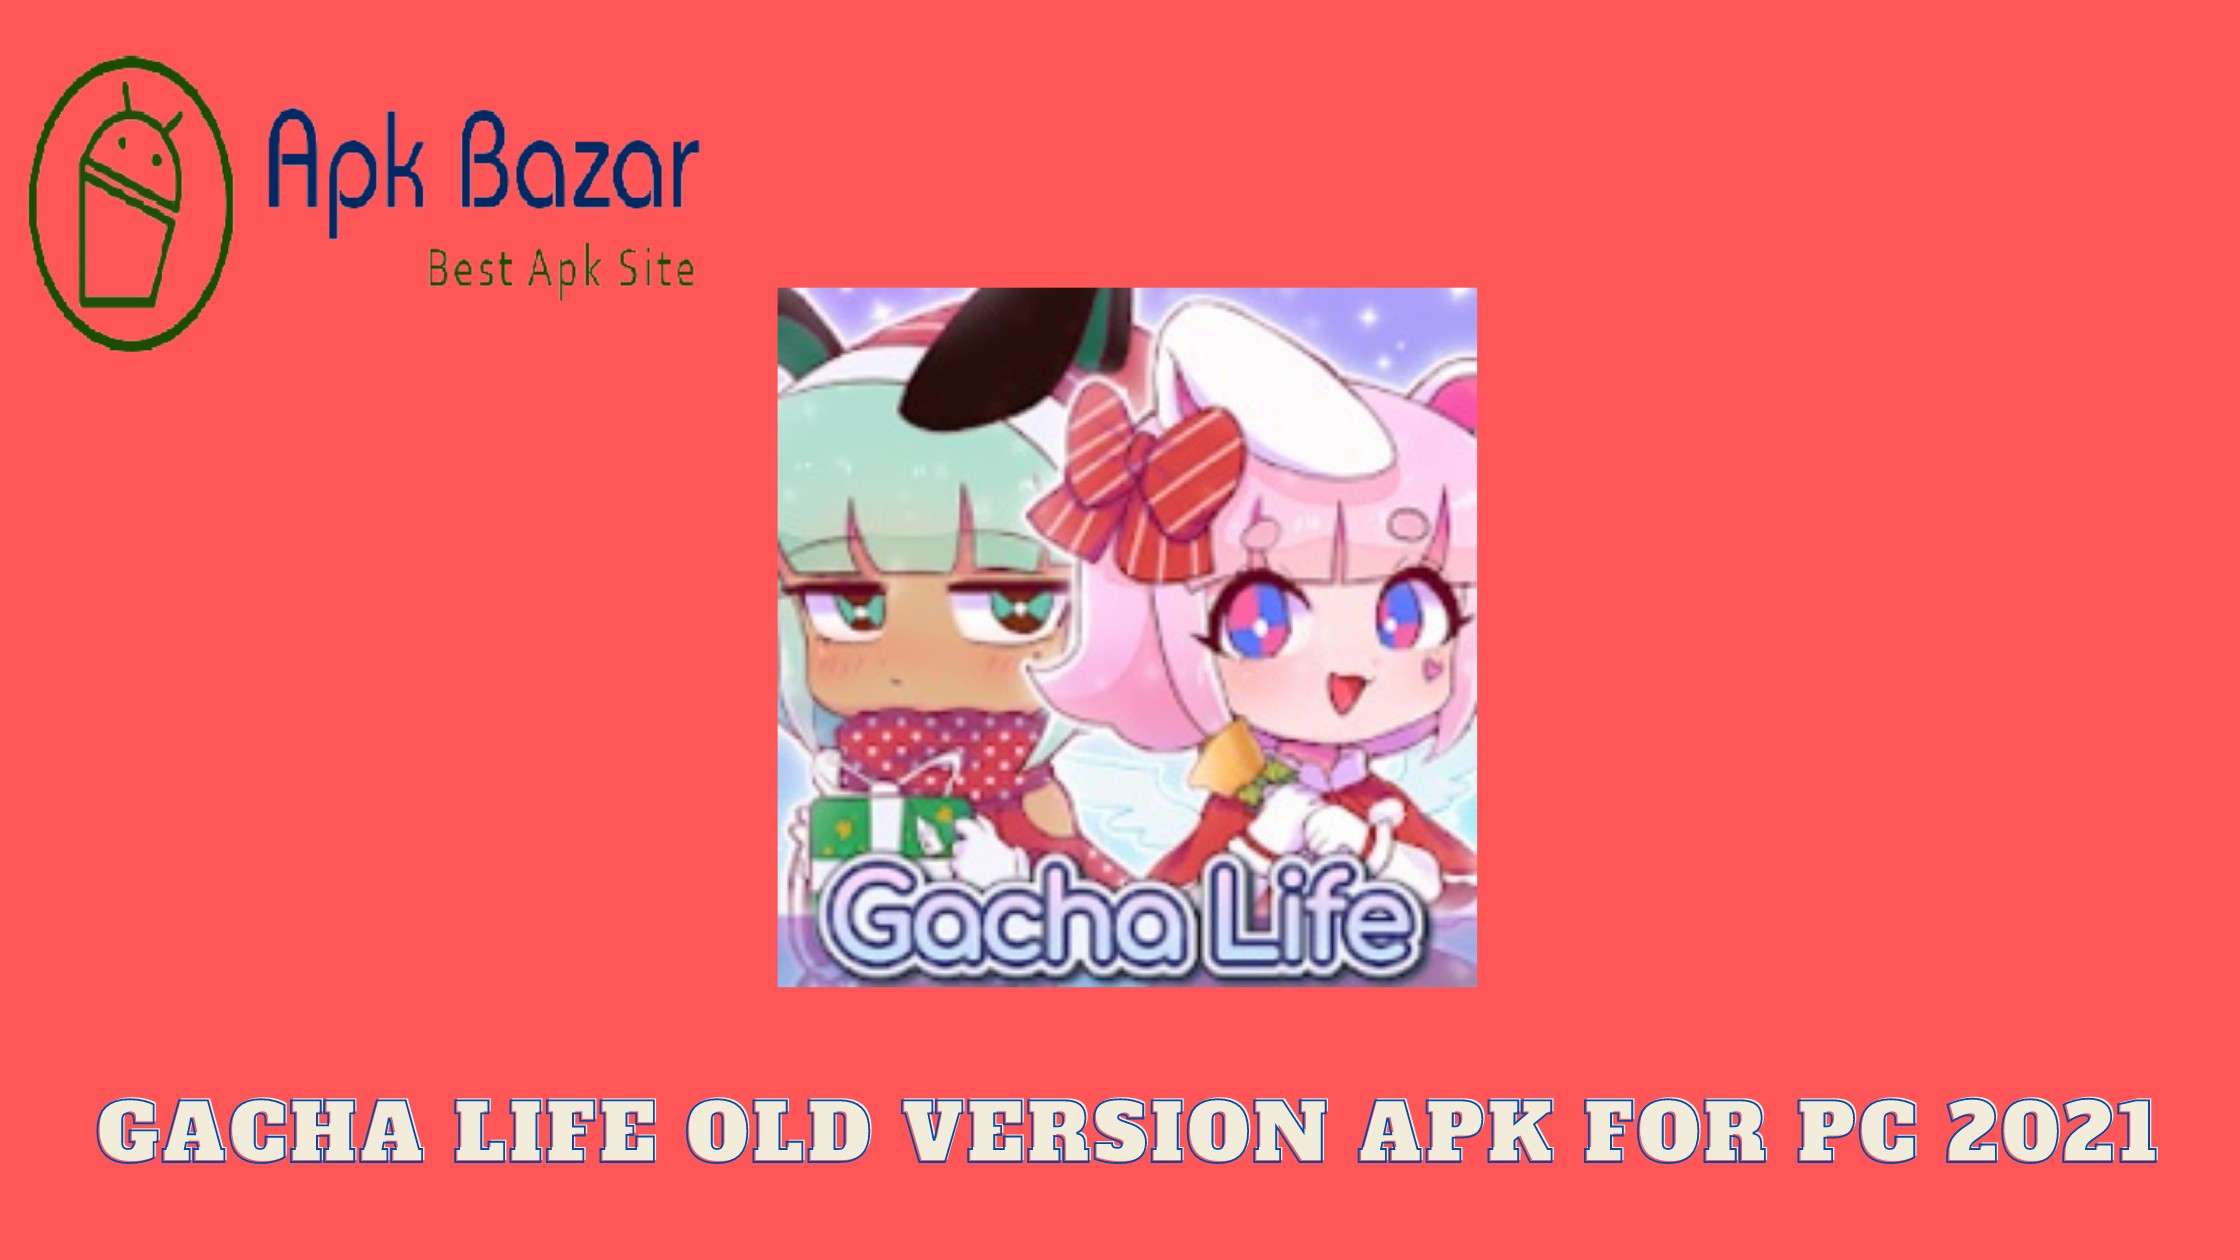 Life old version gacha Download Gacha